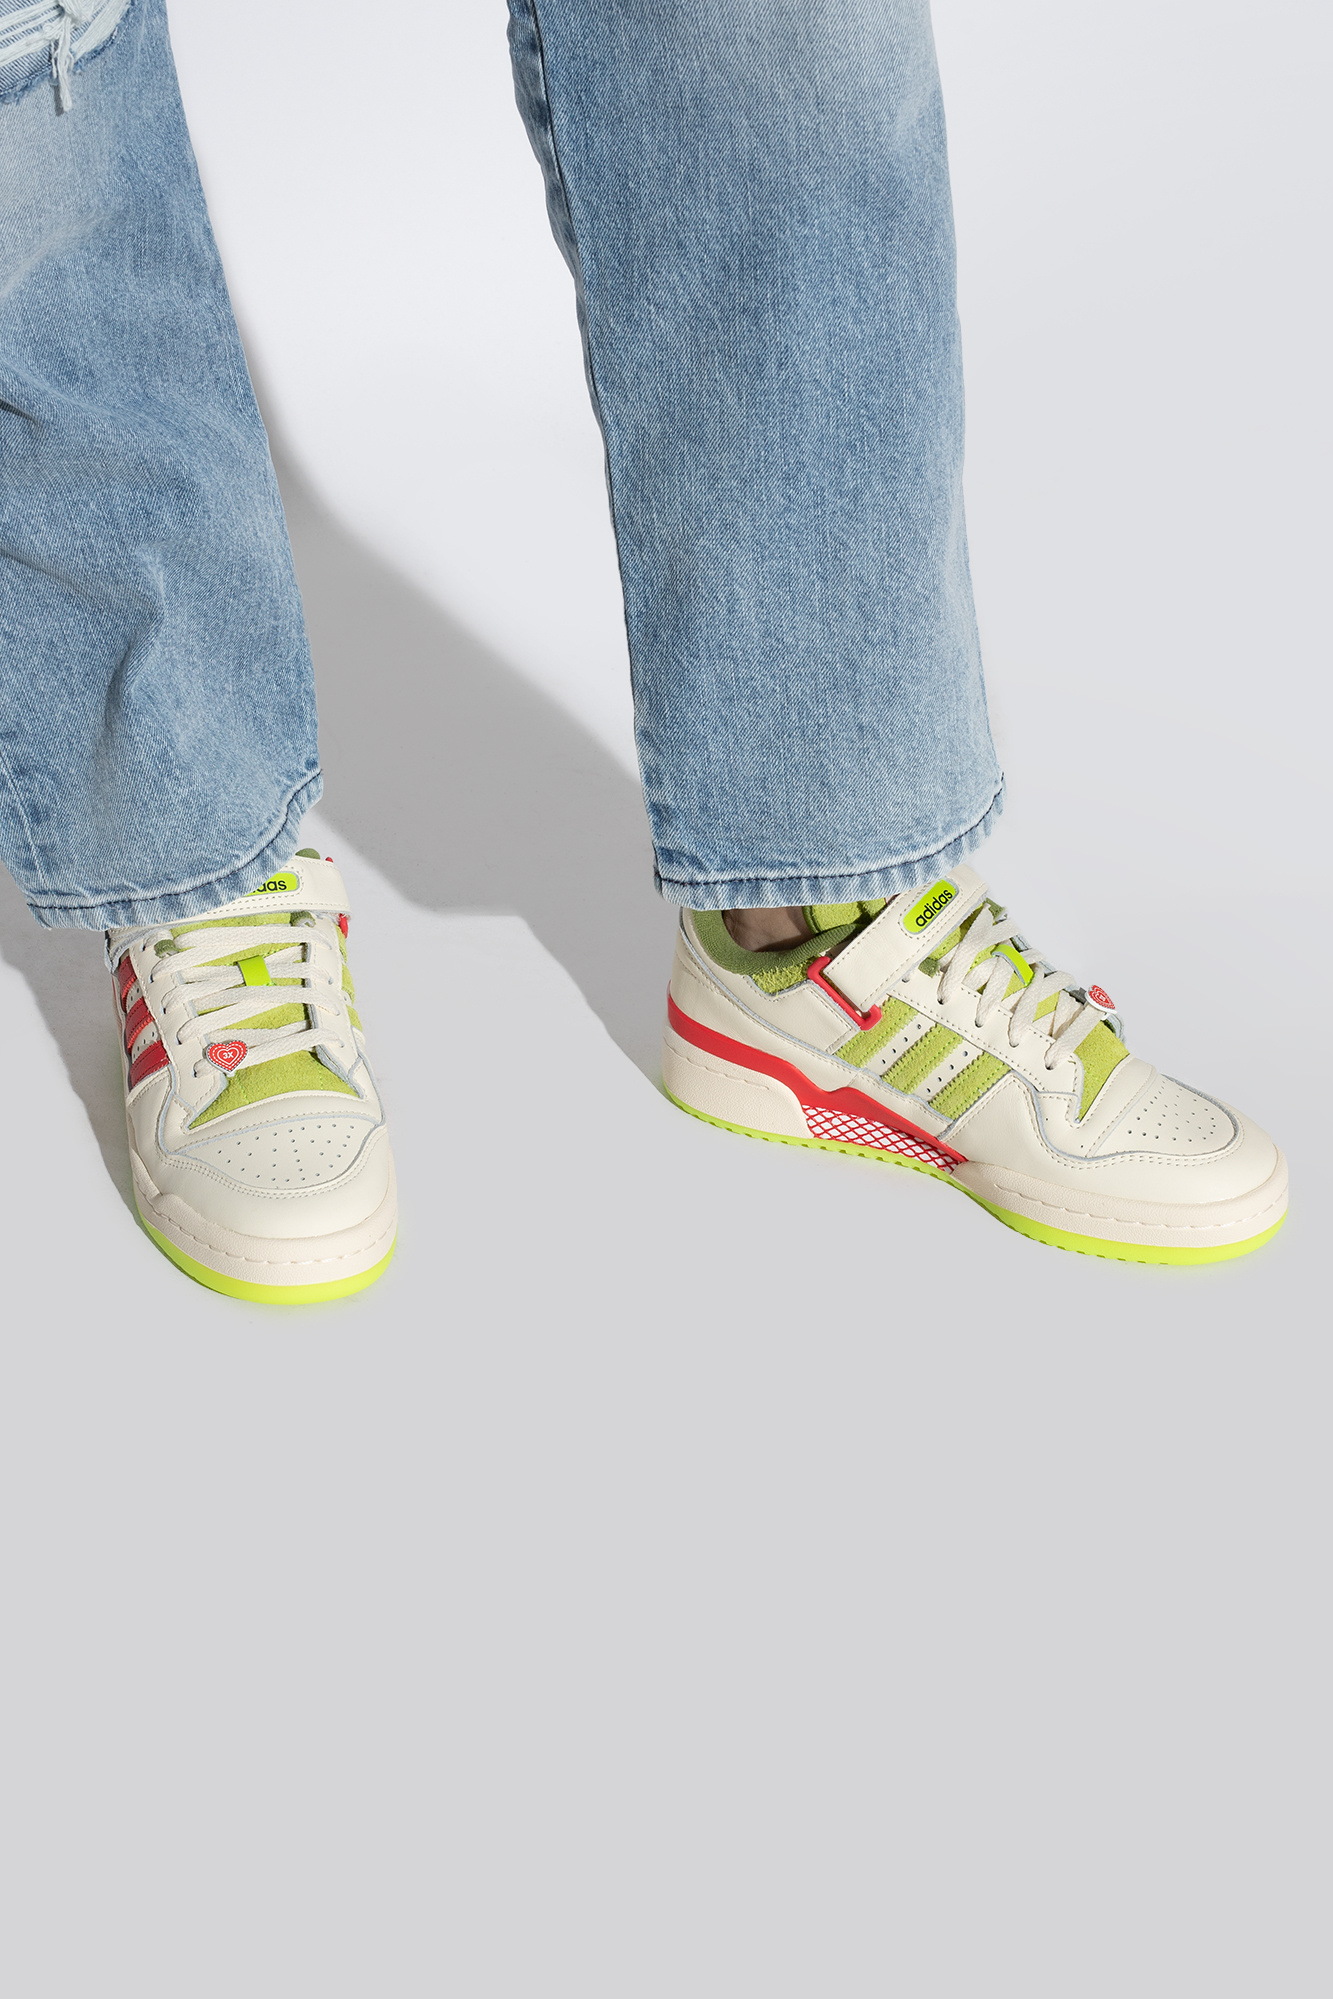 ADIDAS Originals ‘FORUM LOW X THE GRINCH’ sneakers